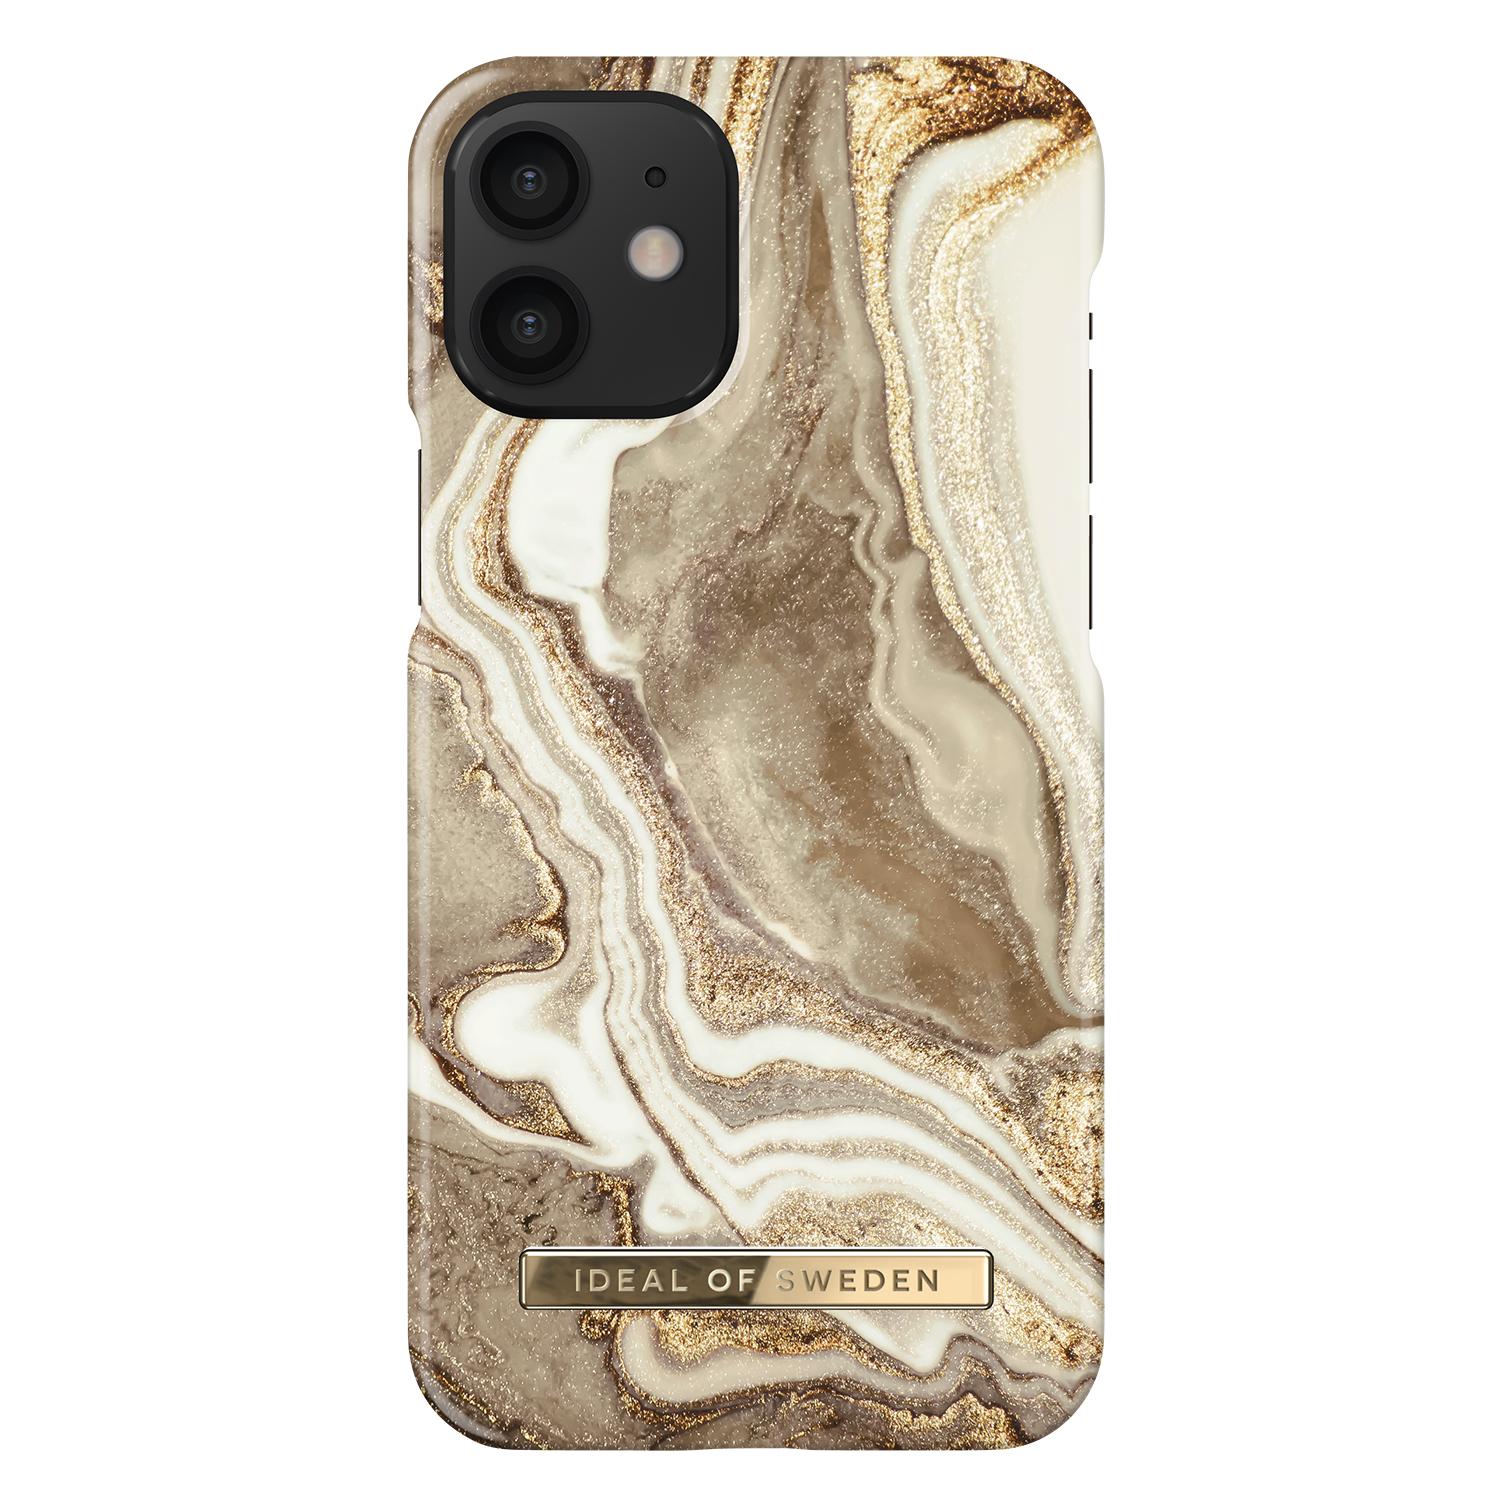 Coque Fashion Case iPhone 12 Mini Golden Sand Marble